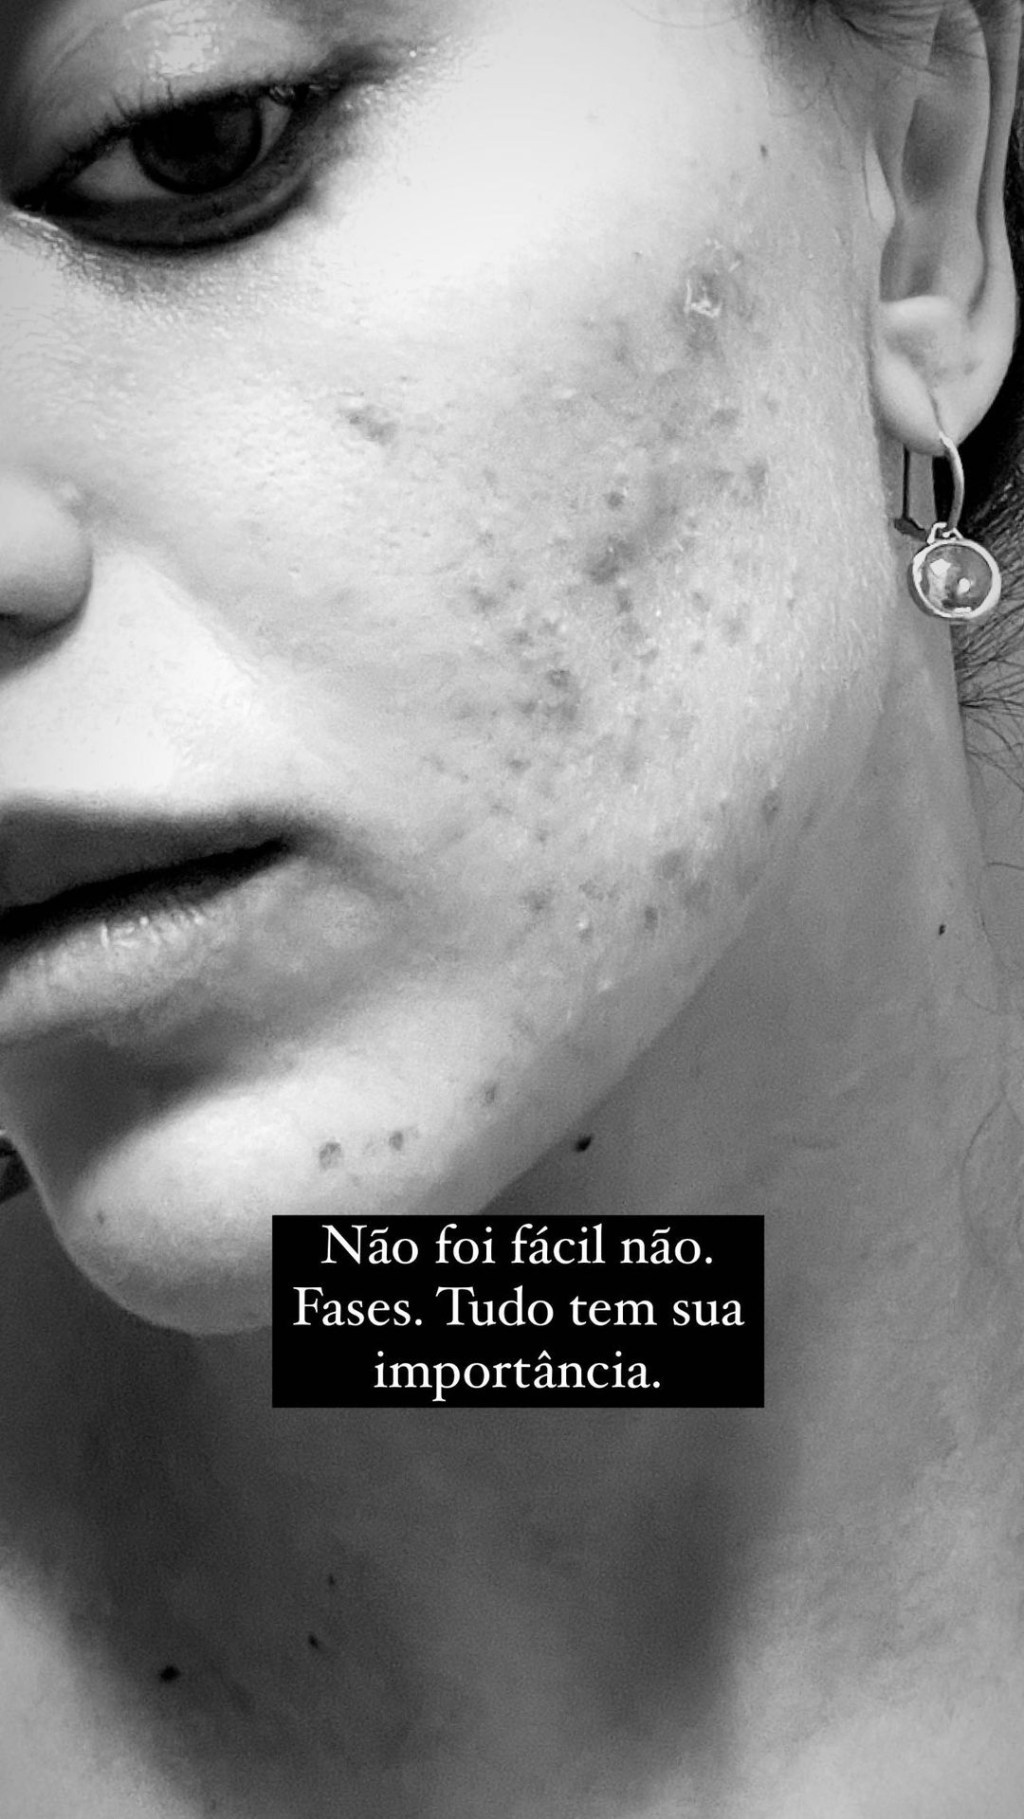 Rafa Kalimann mostrando rosto com acne